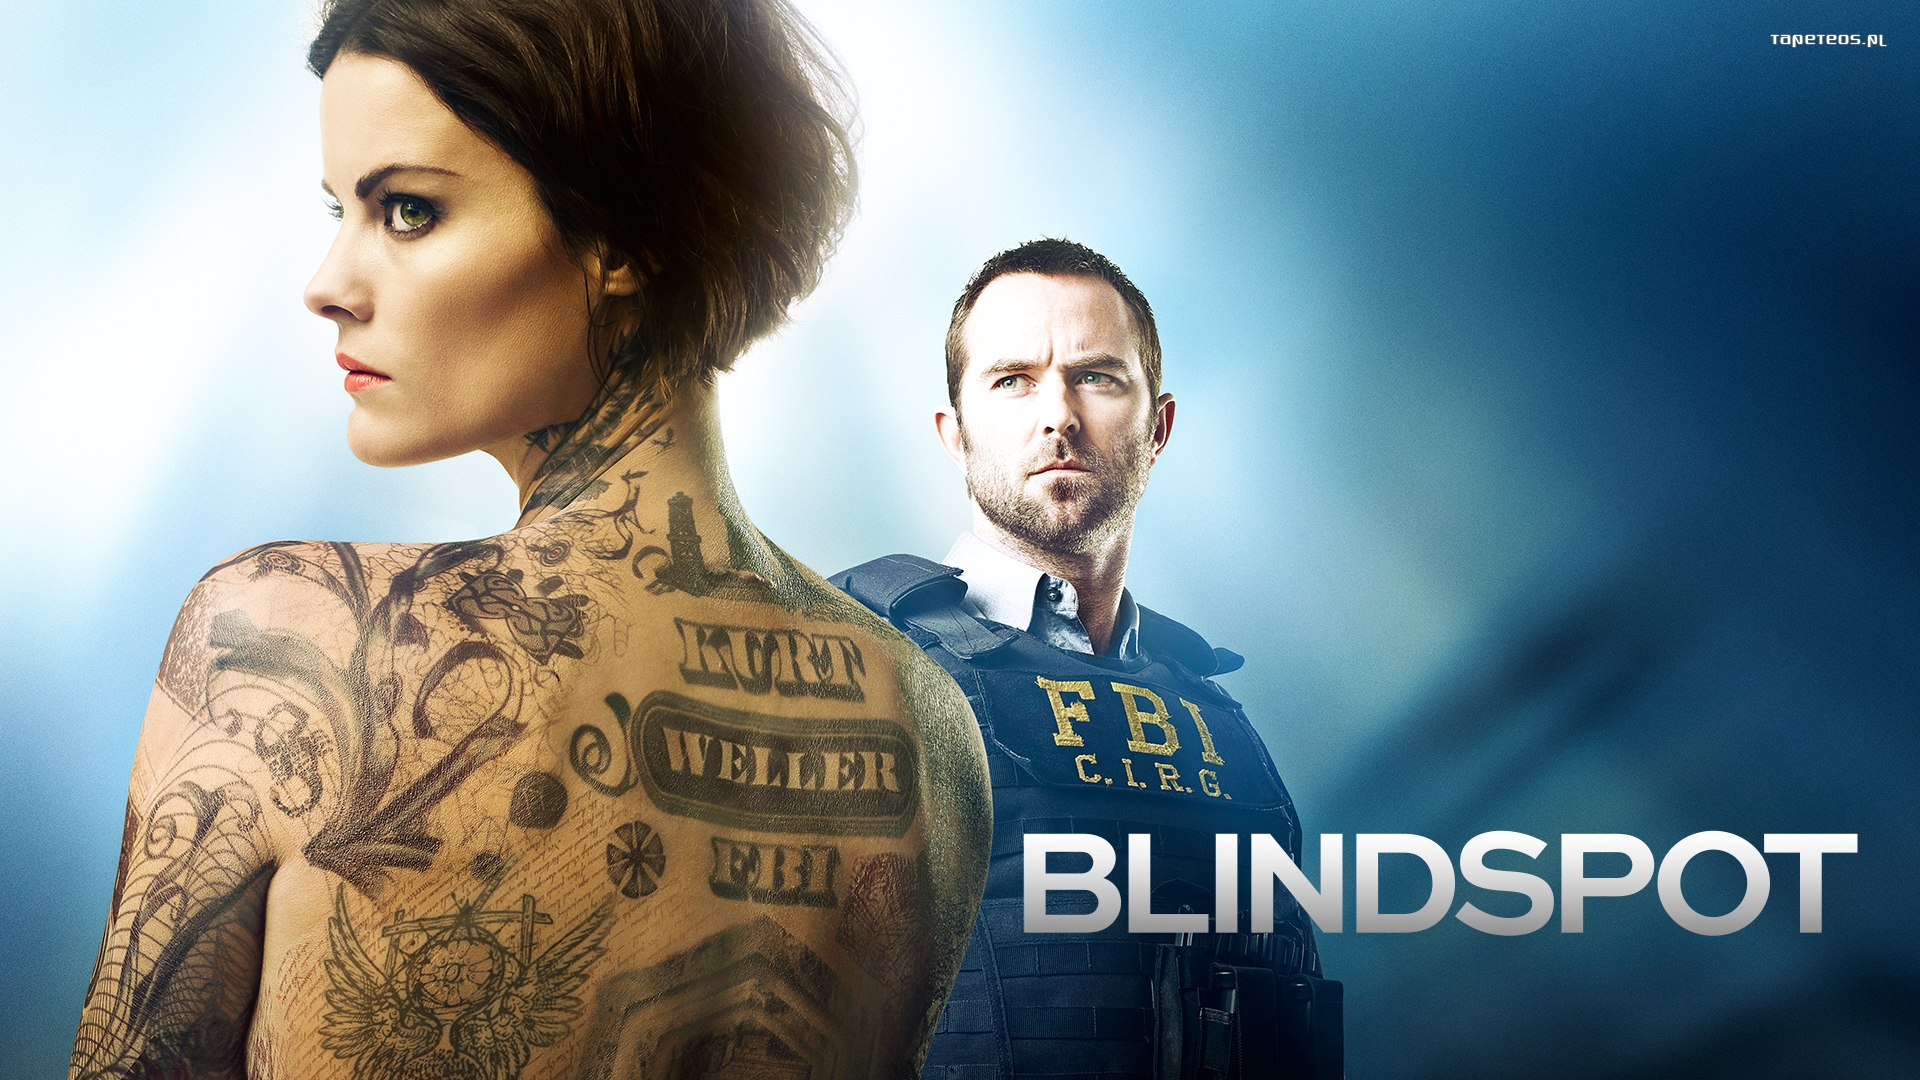 Blindspot Mapa zbrodni (2015) TV 026 Jaimie Alexander jako Jane Doe, Sullivan Stapleton jako Kurt Weller